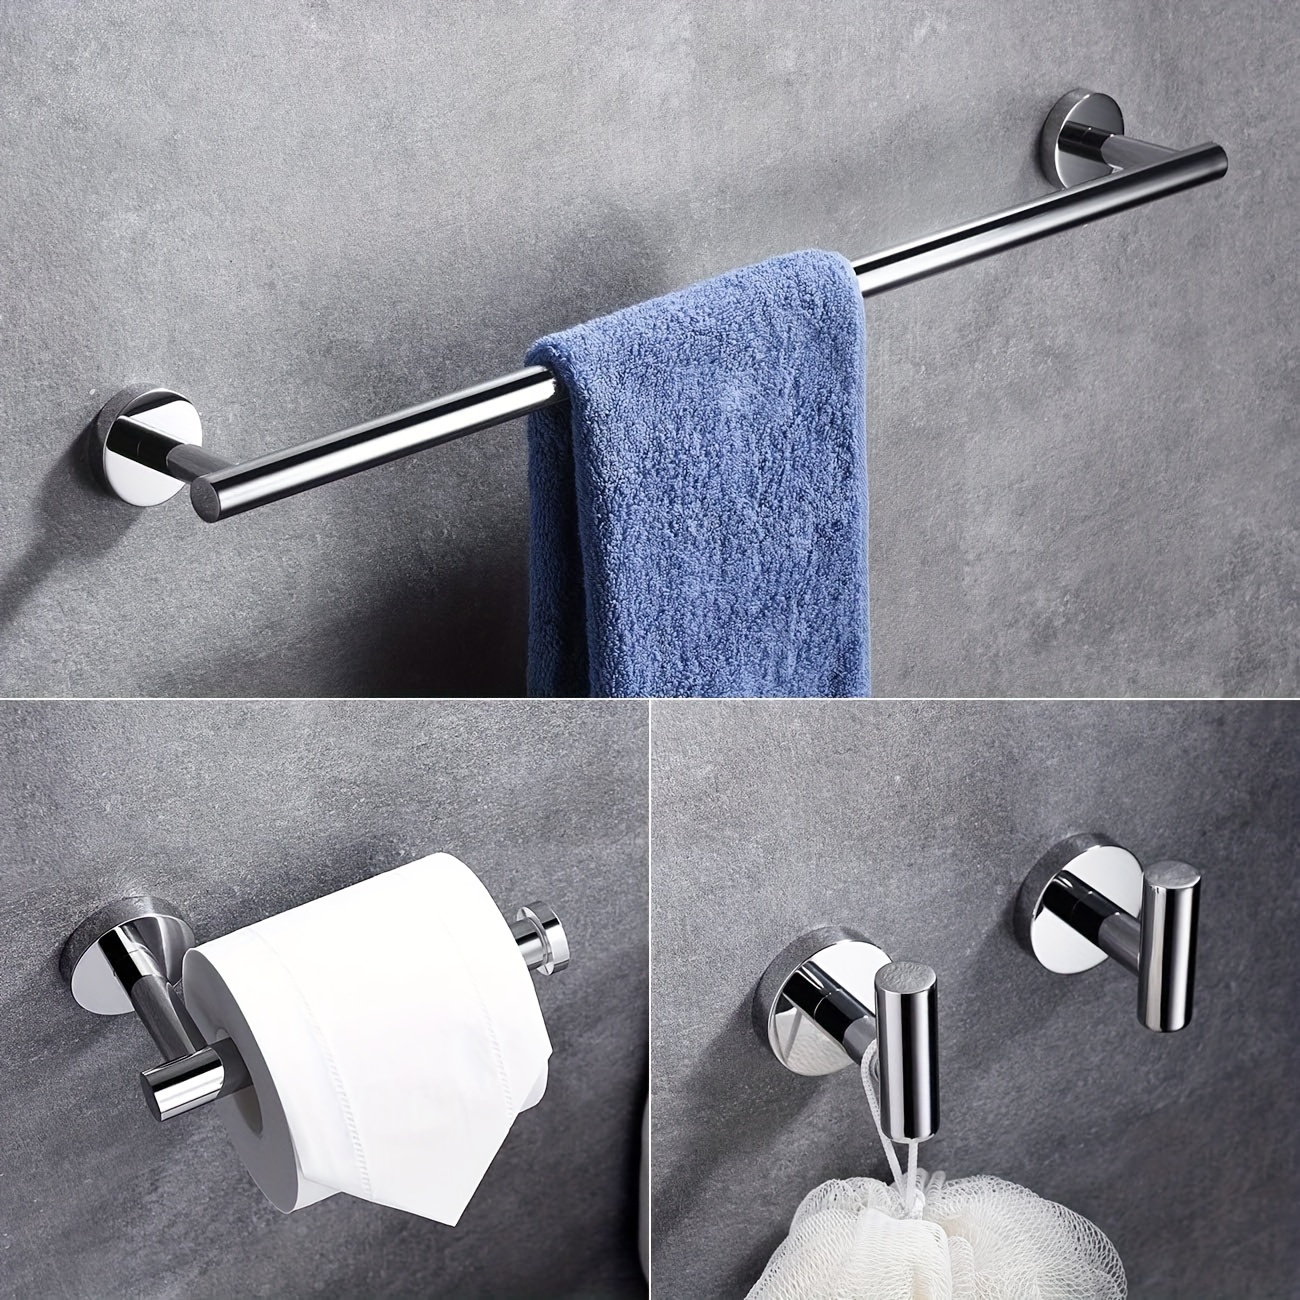  Juego de accesorios de baño de 4 piezas, juego de toallas  incluye toallero, toallero, soporte para papel higiénico, gancho para  toallas, kit de accesorios de baño de 16 pulgadas, negro mate 